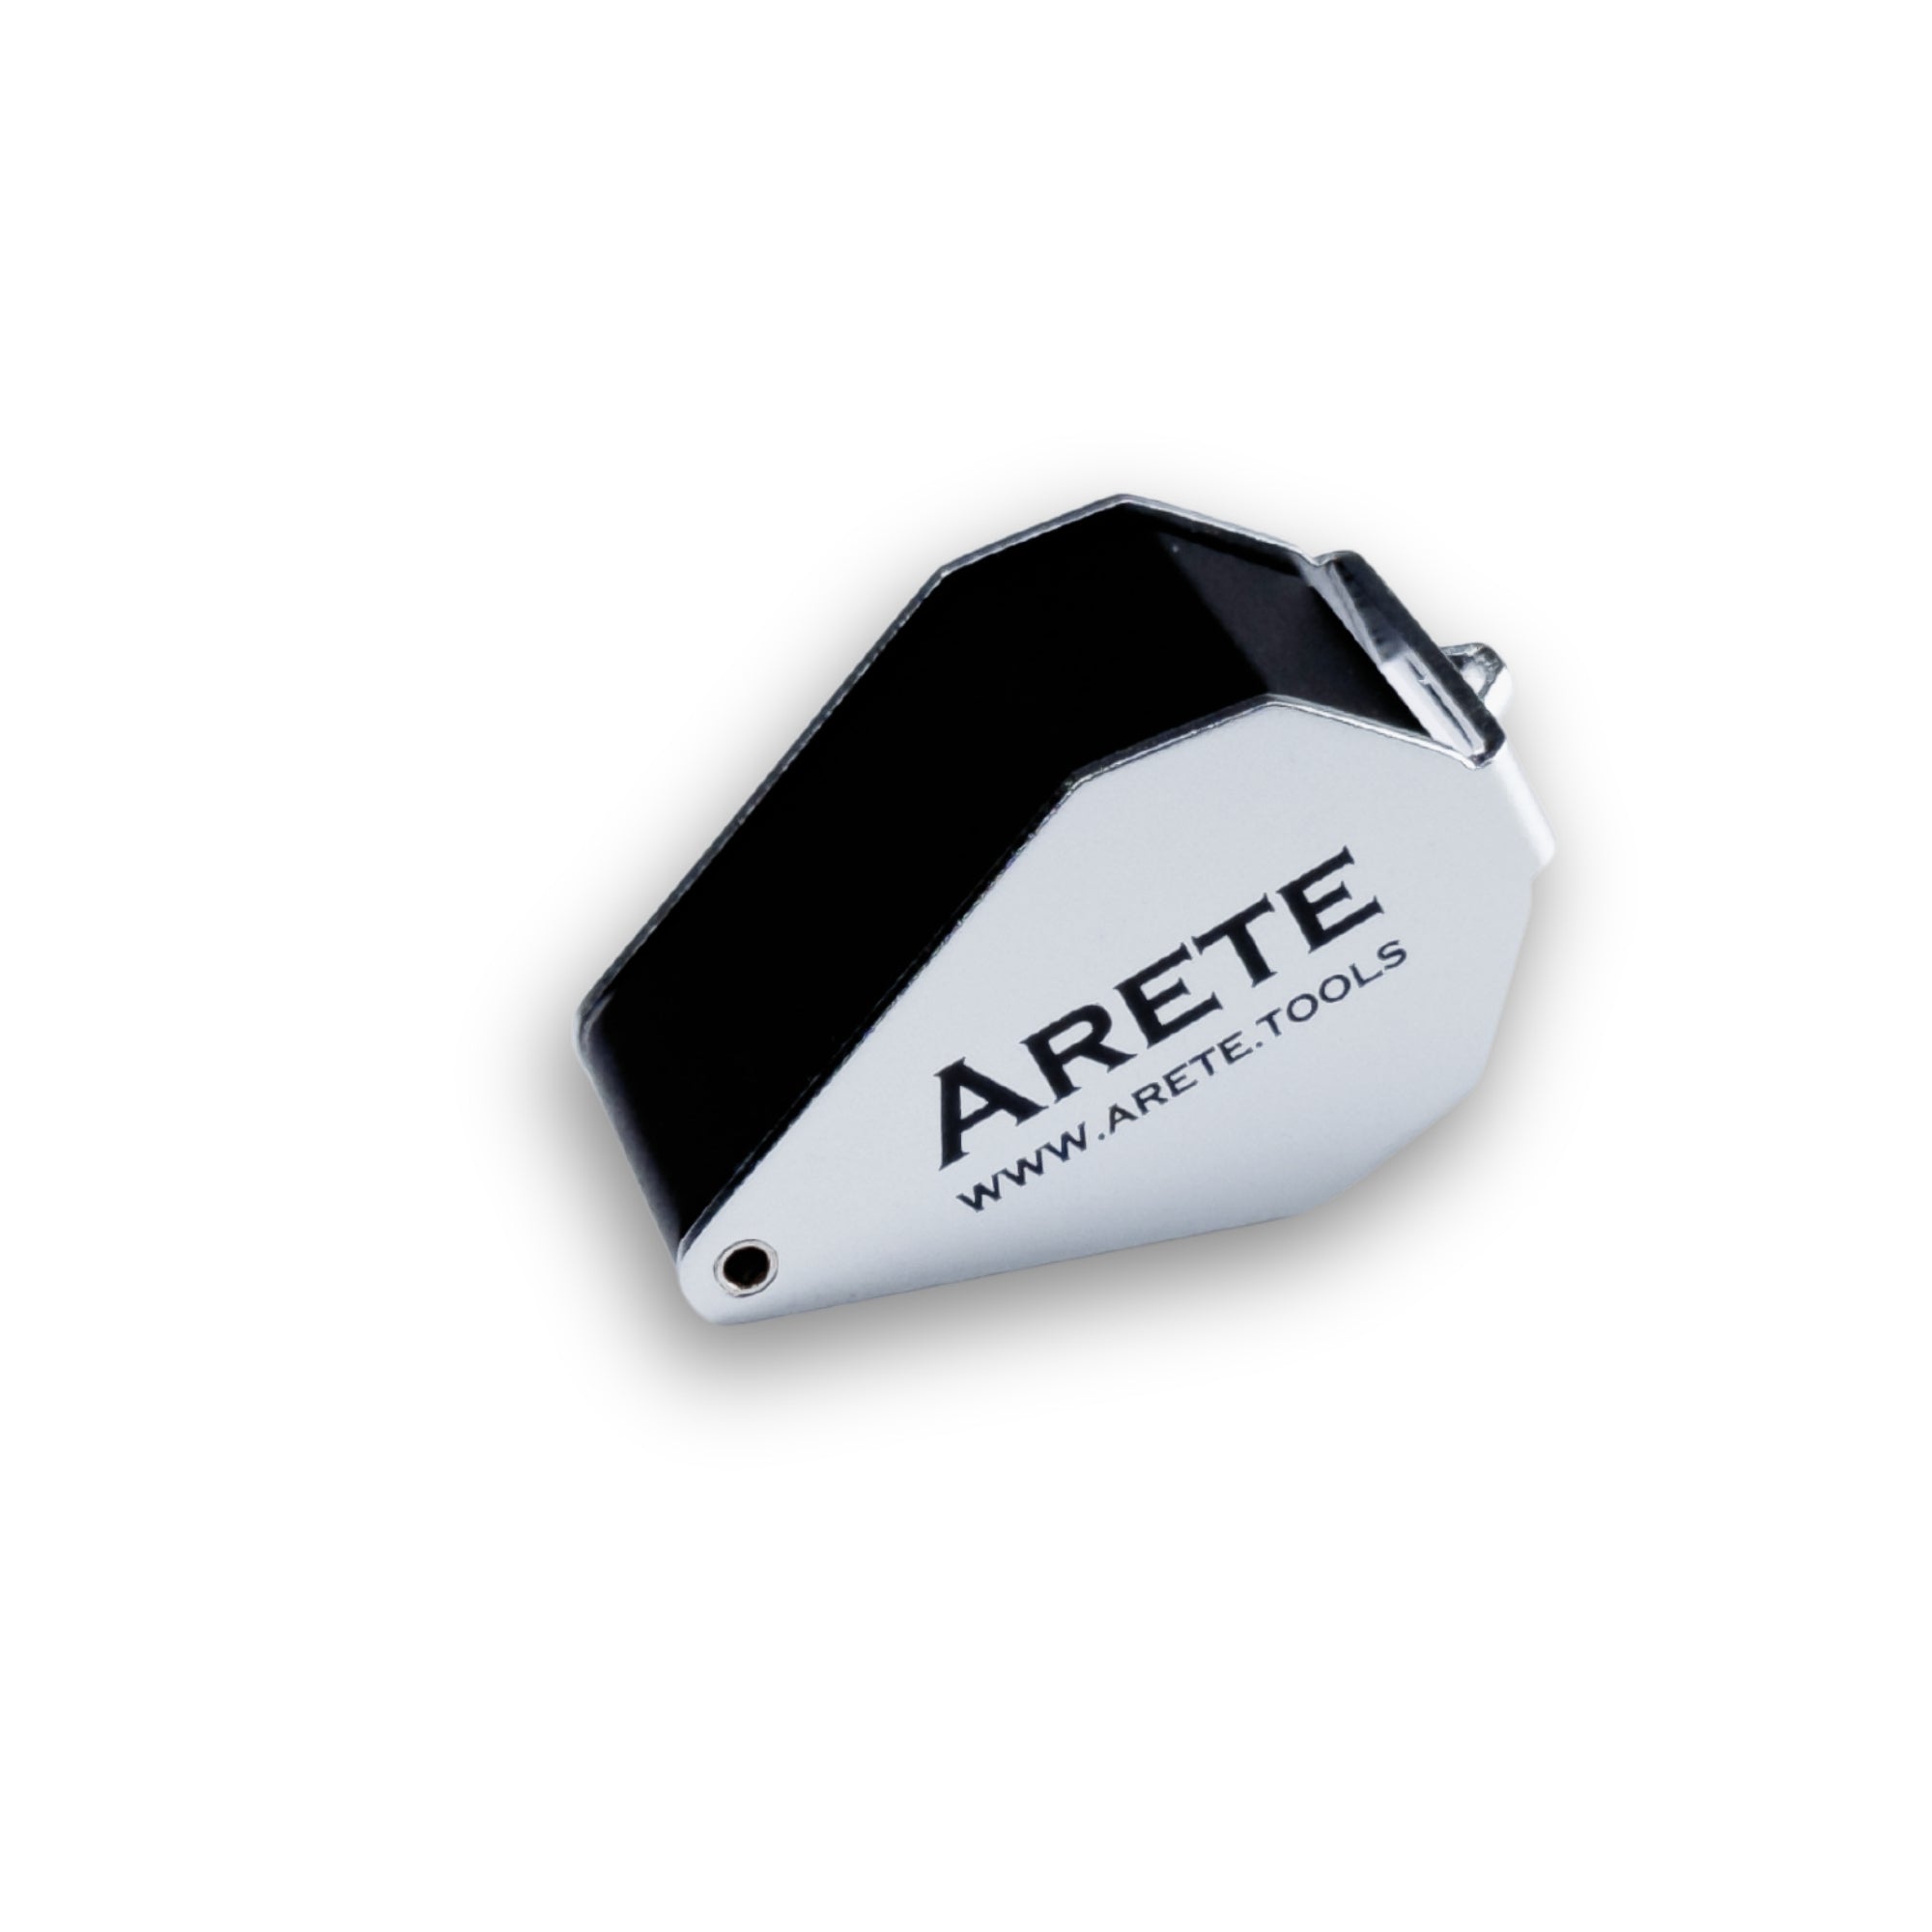 Джобна лупа Arete 10x - 21mm с LED светлина на батерии